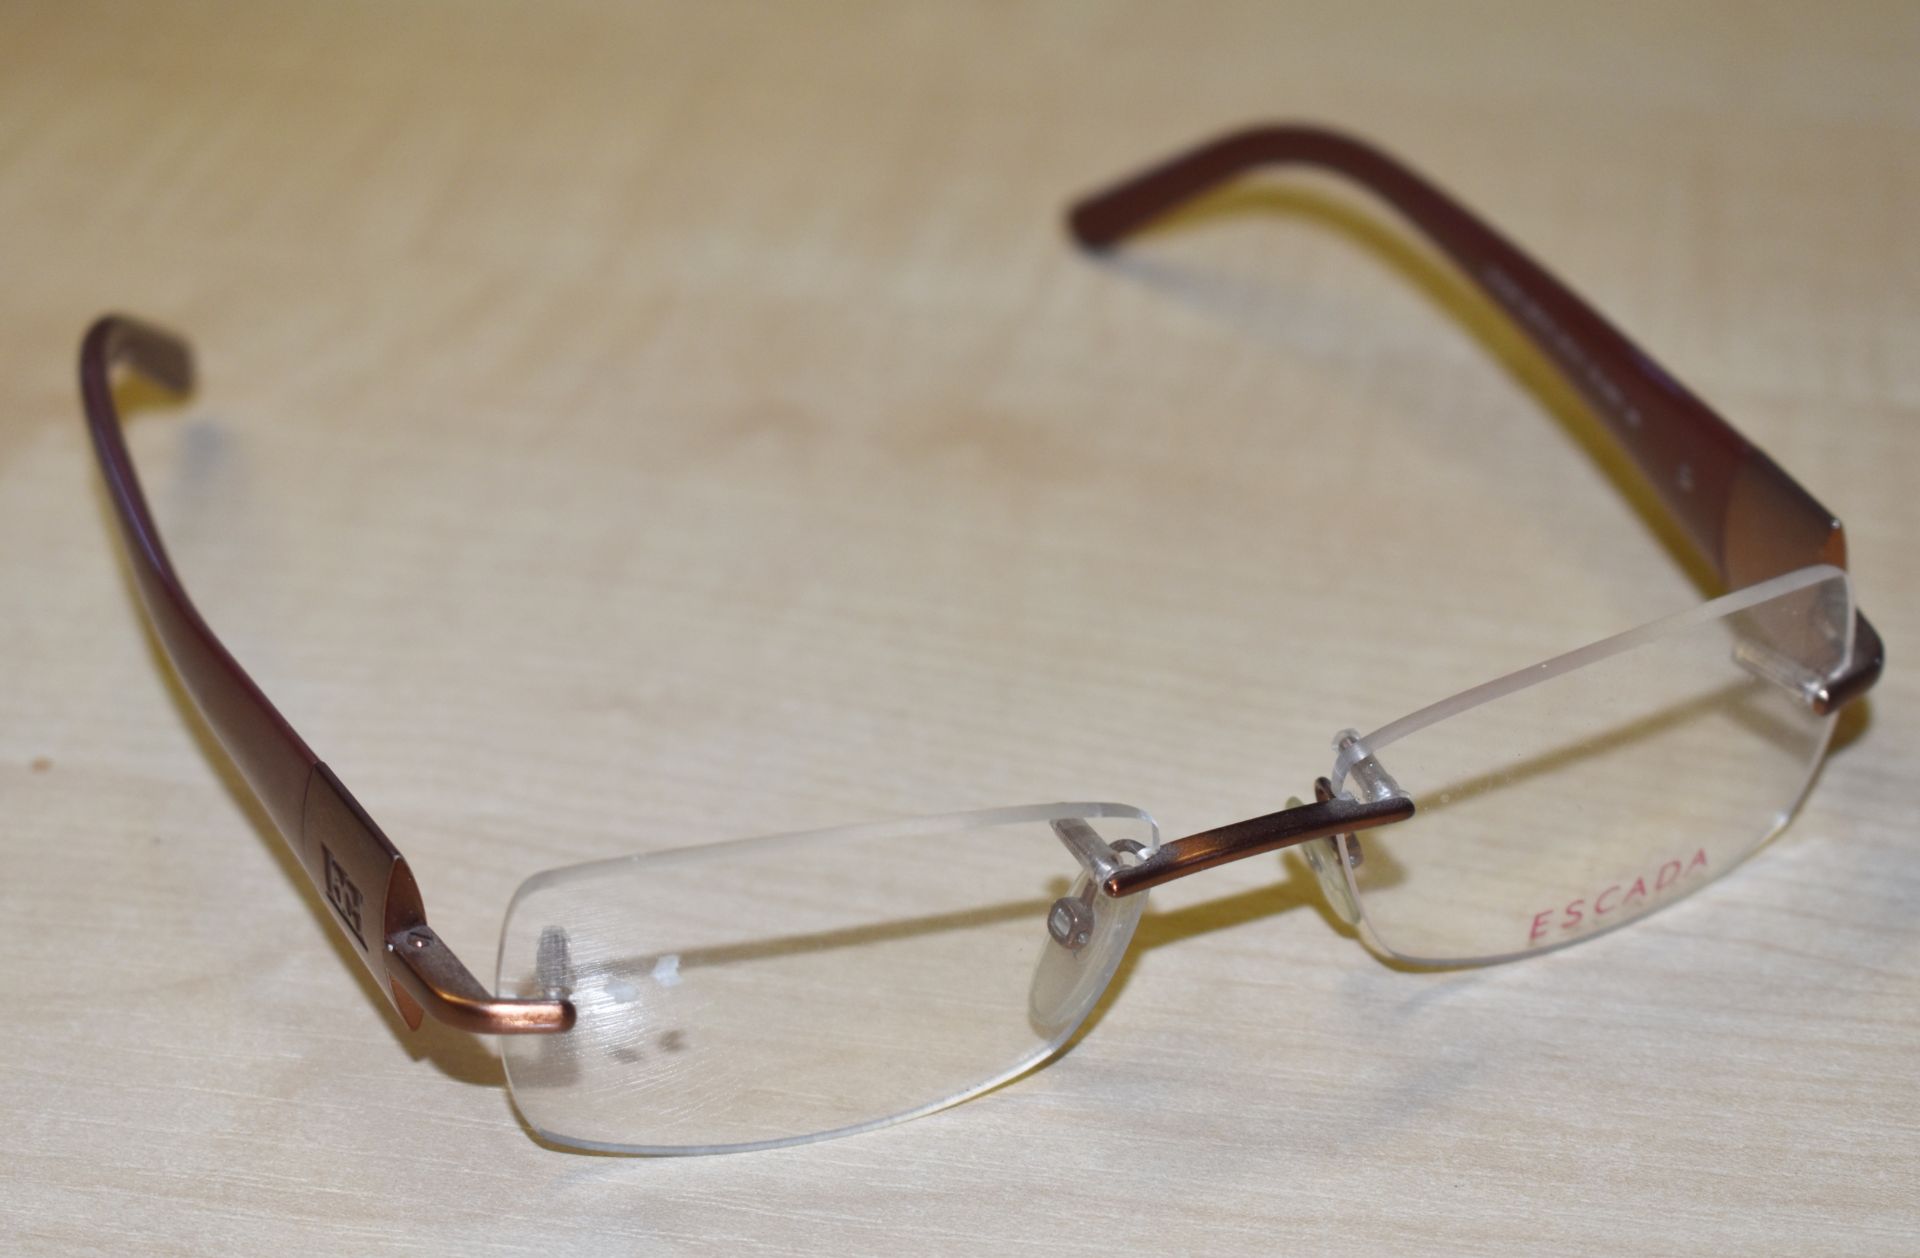 1 x Genuine ESCADA Spectacle Eye Glasses Frame - Ex Display Stock  - Ref: GTI199 - CL645 - Location: